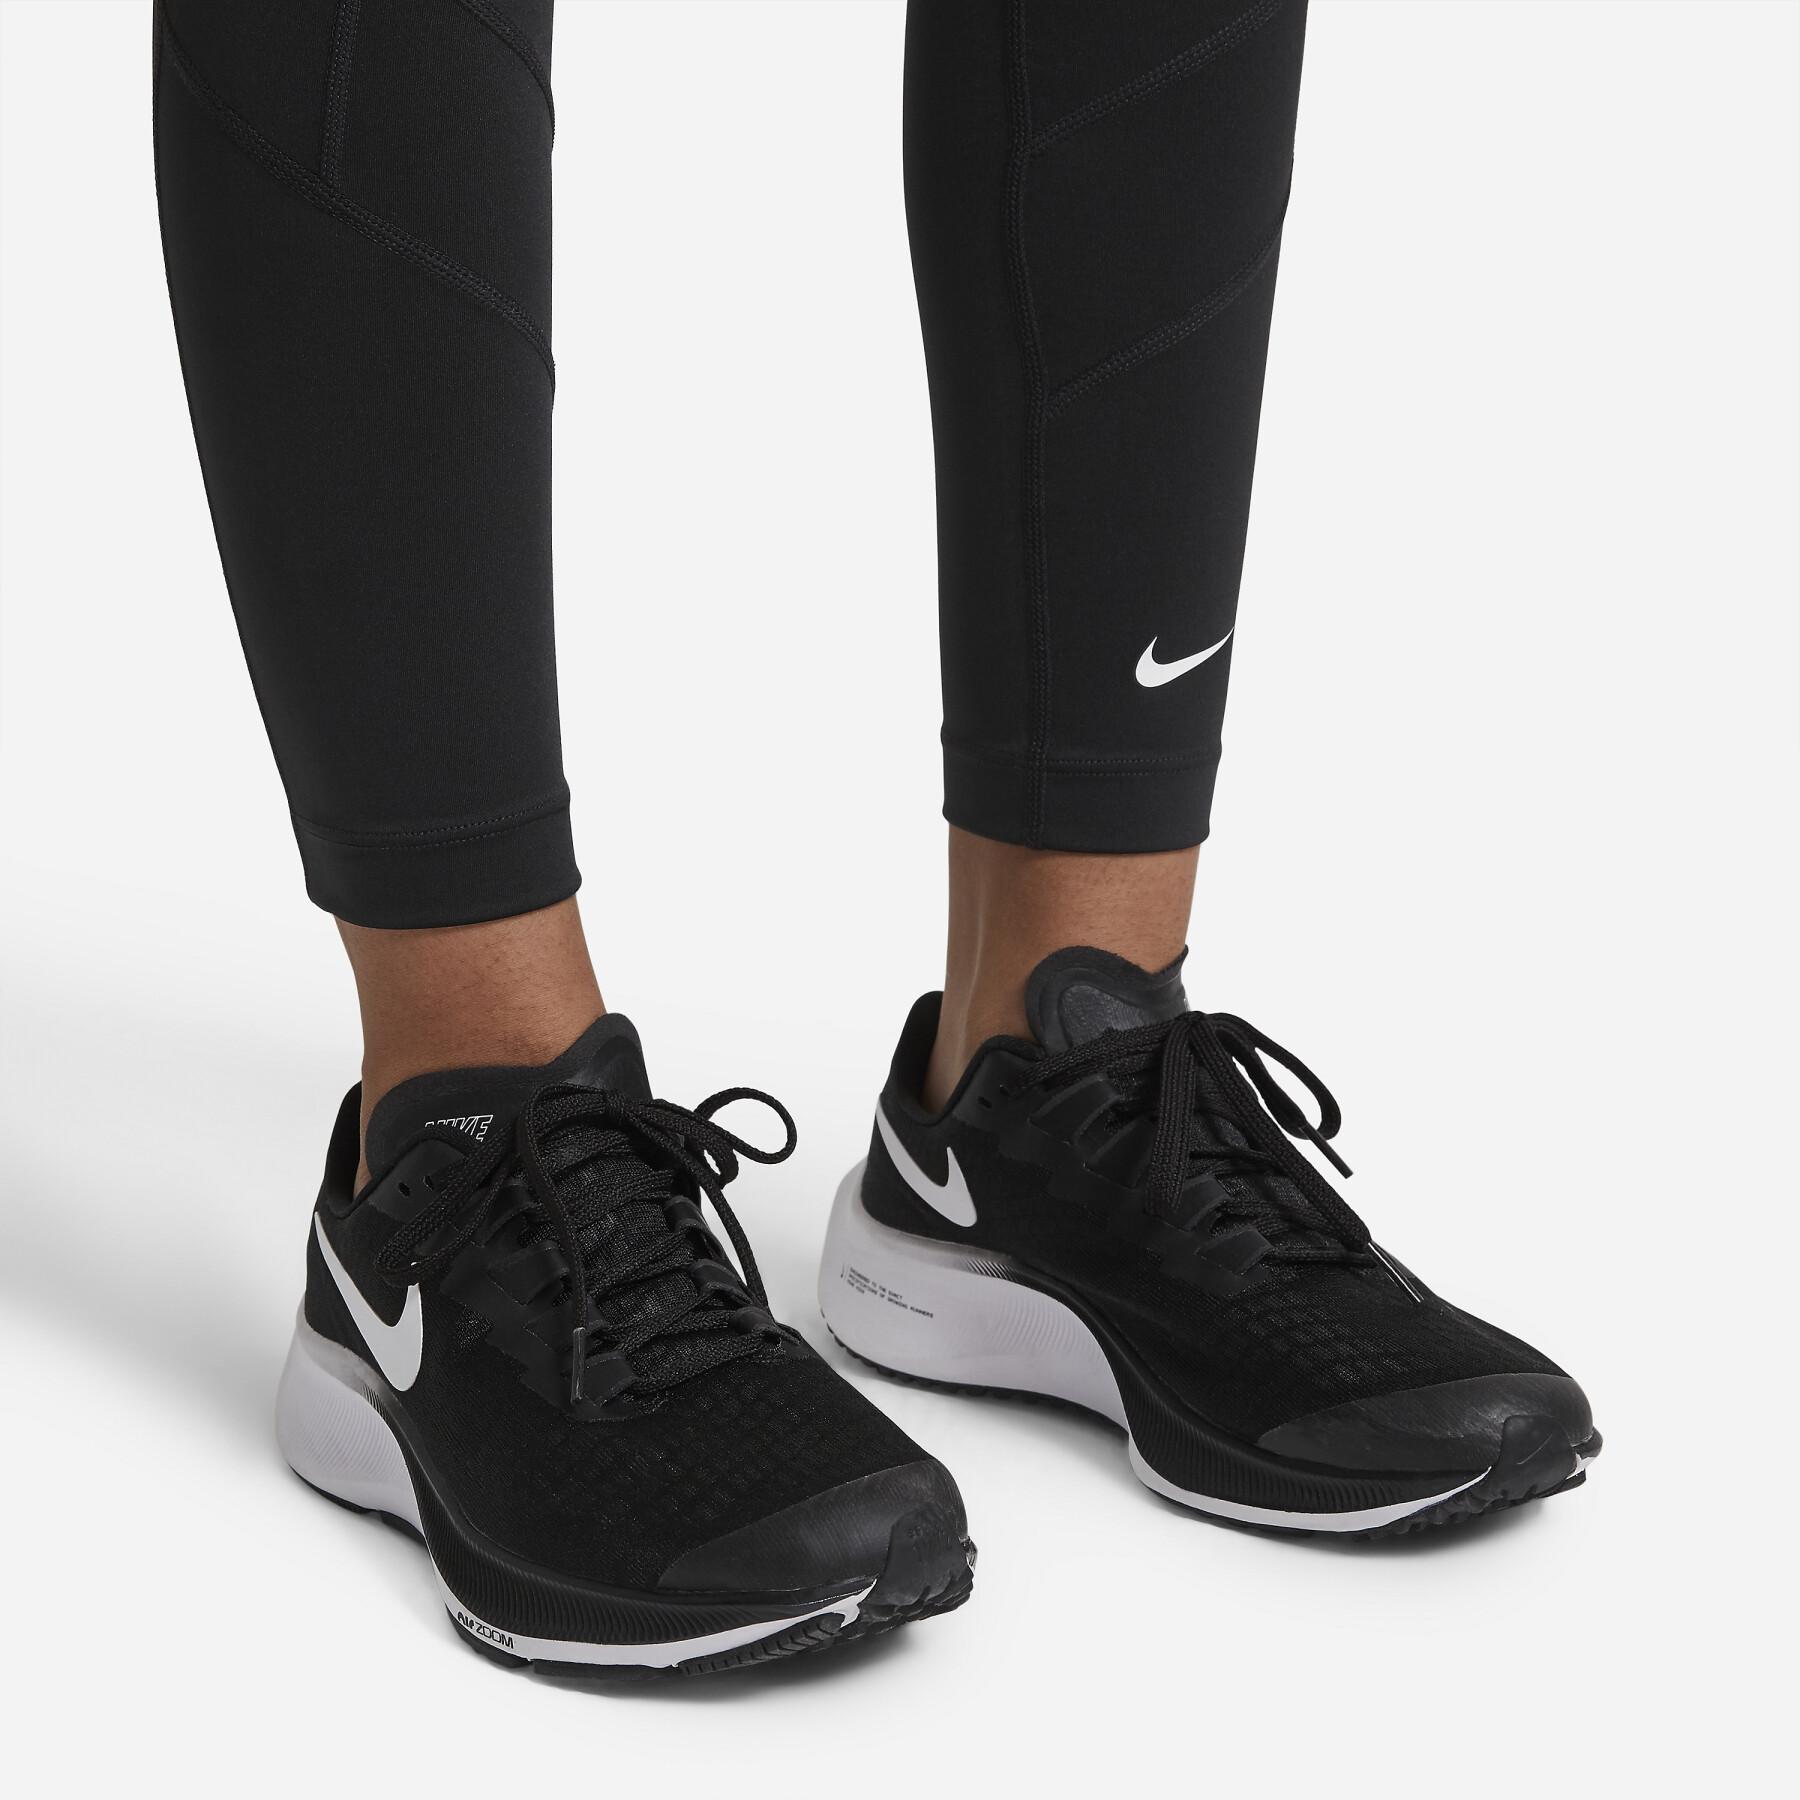 Pernas de menina Nike One